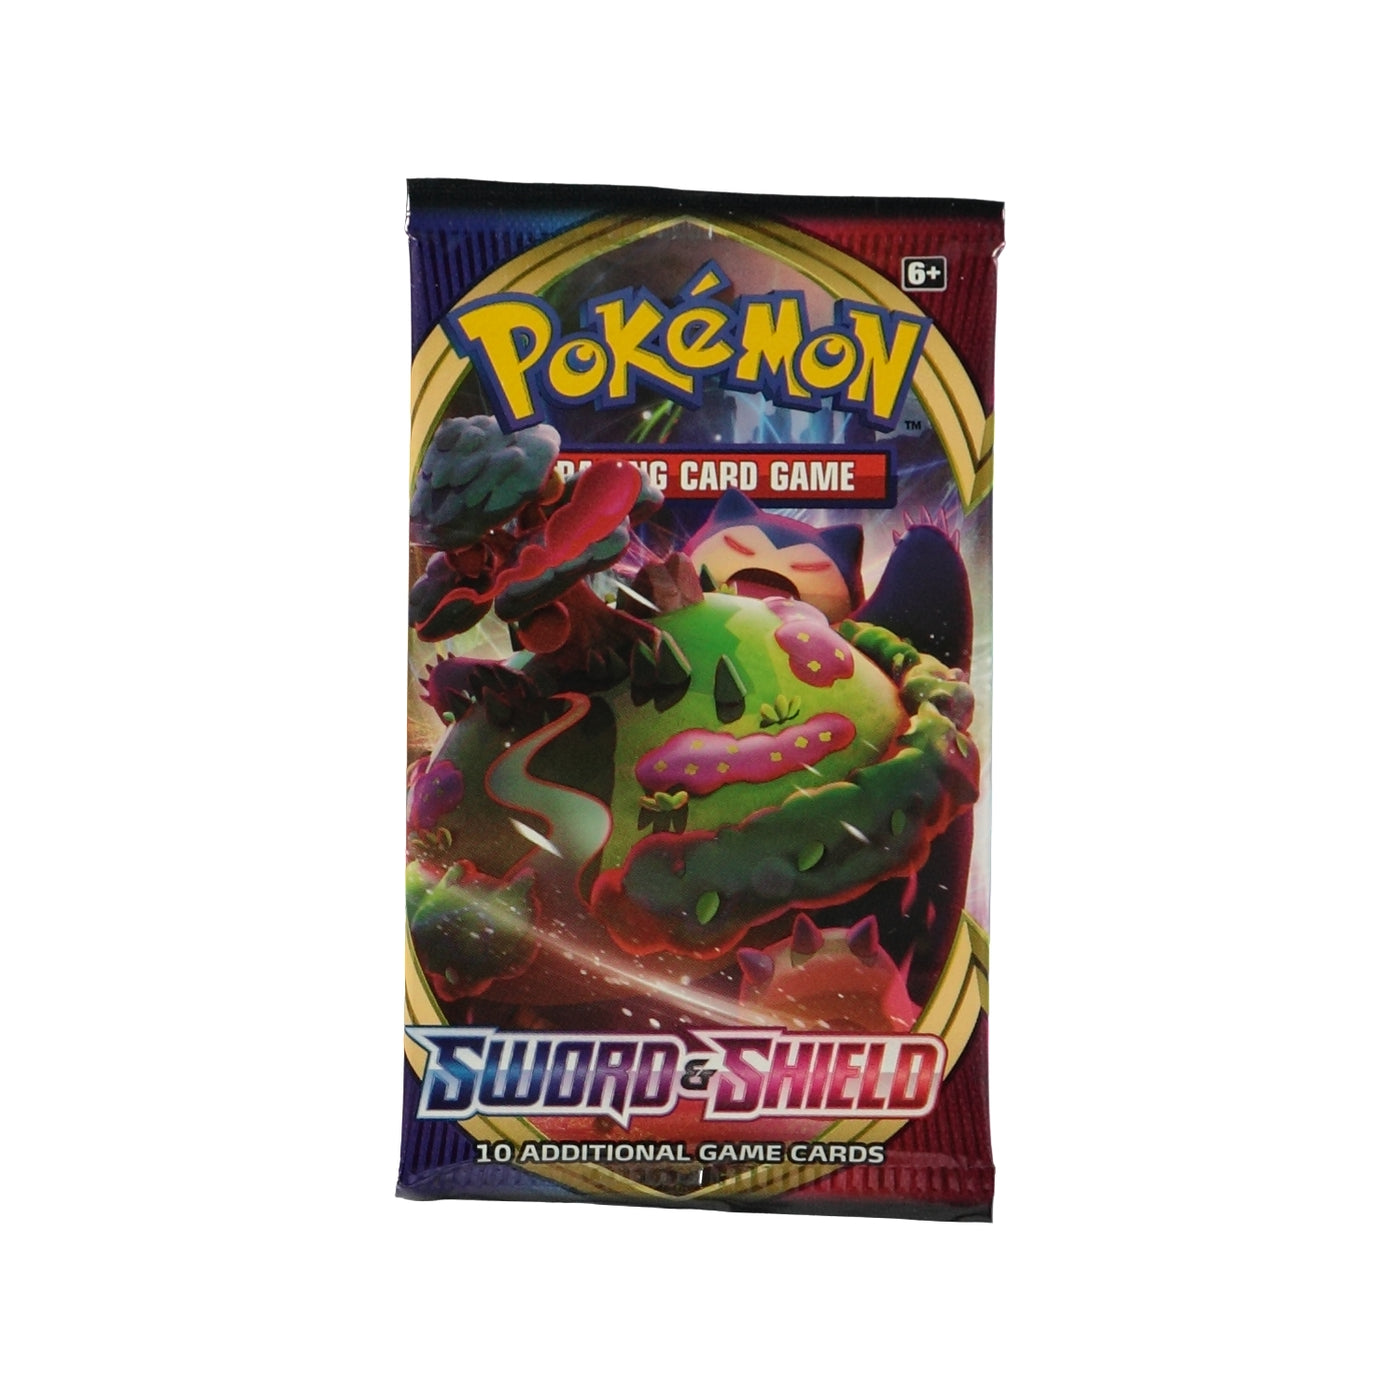 Pokemon TCG Sword & Shield Foil Booster Pack (1 Pack) - stylecreep.com